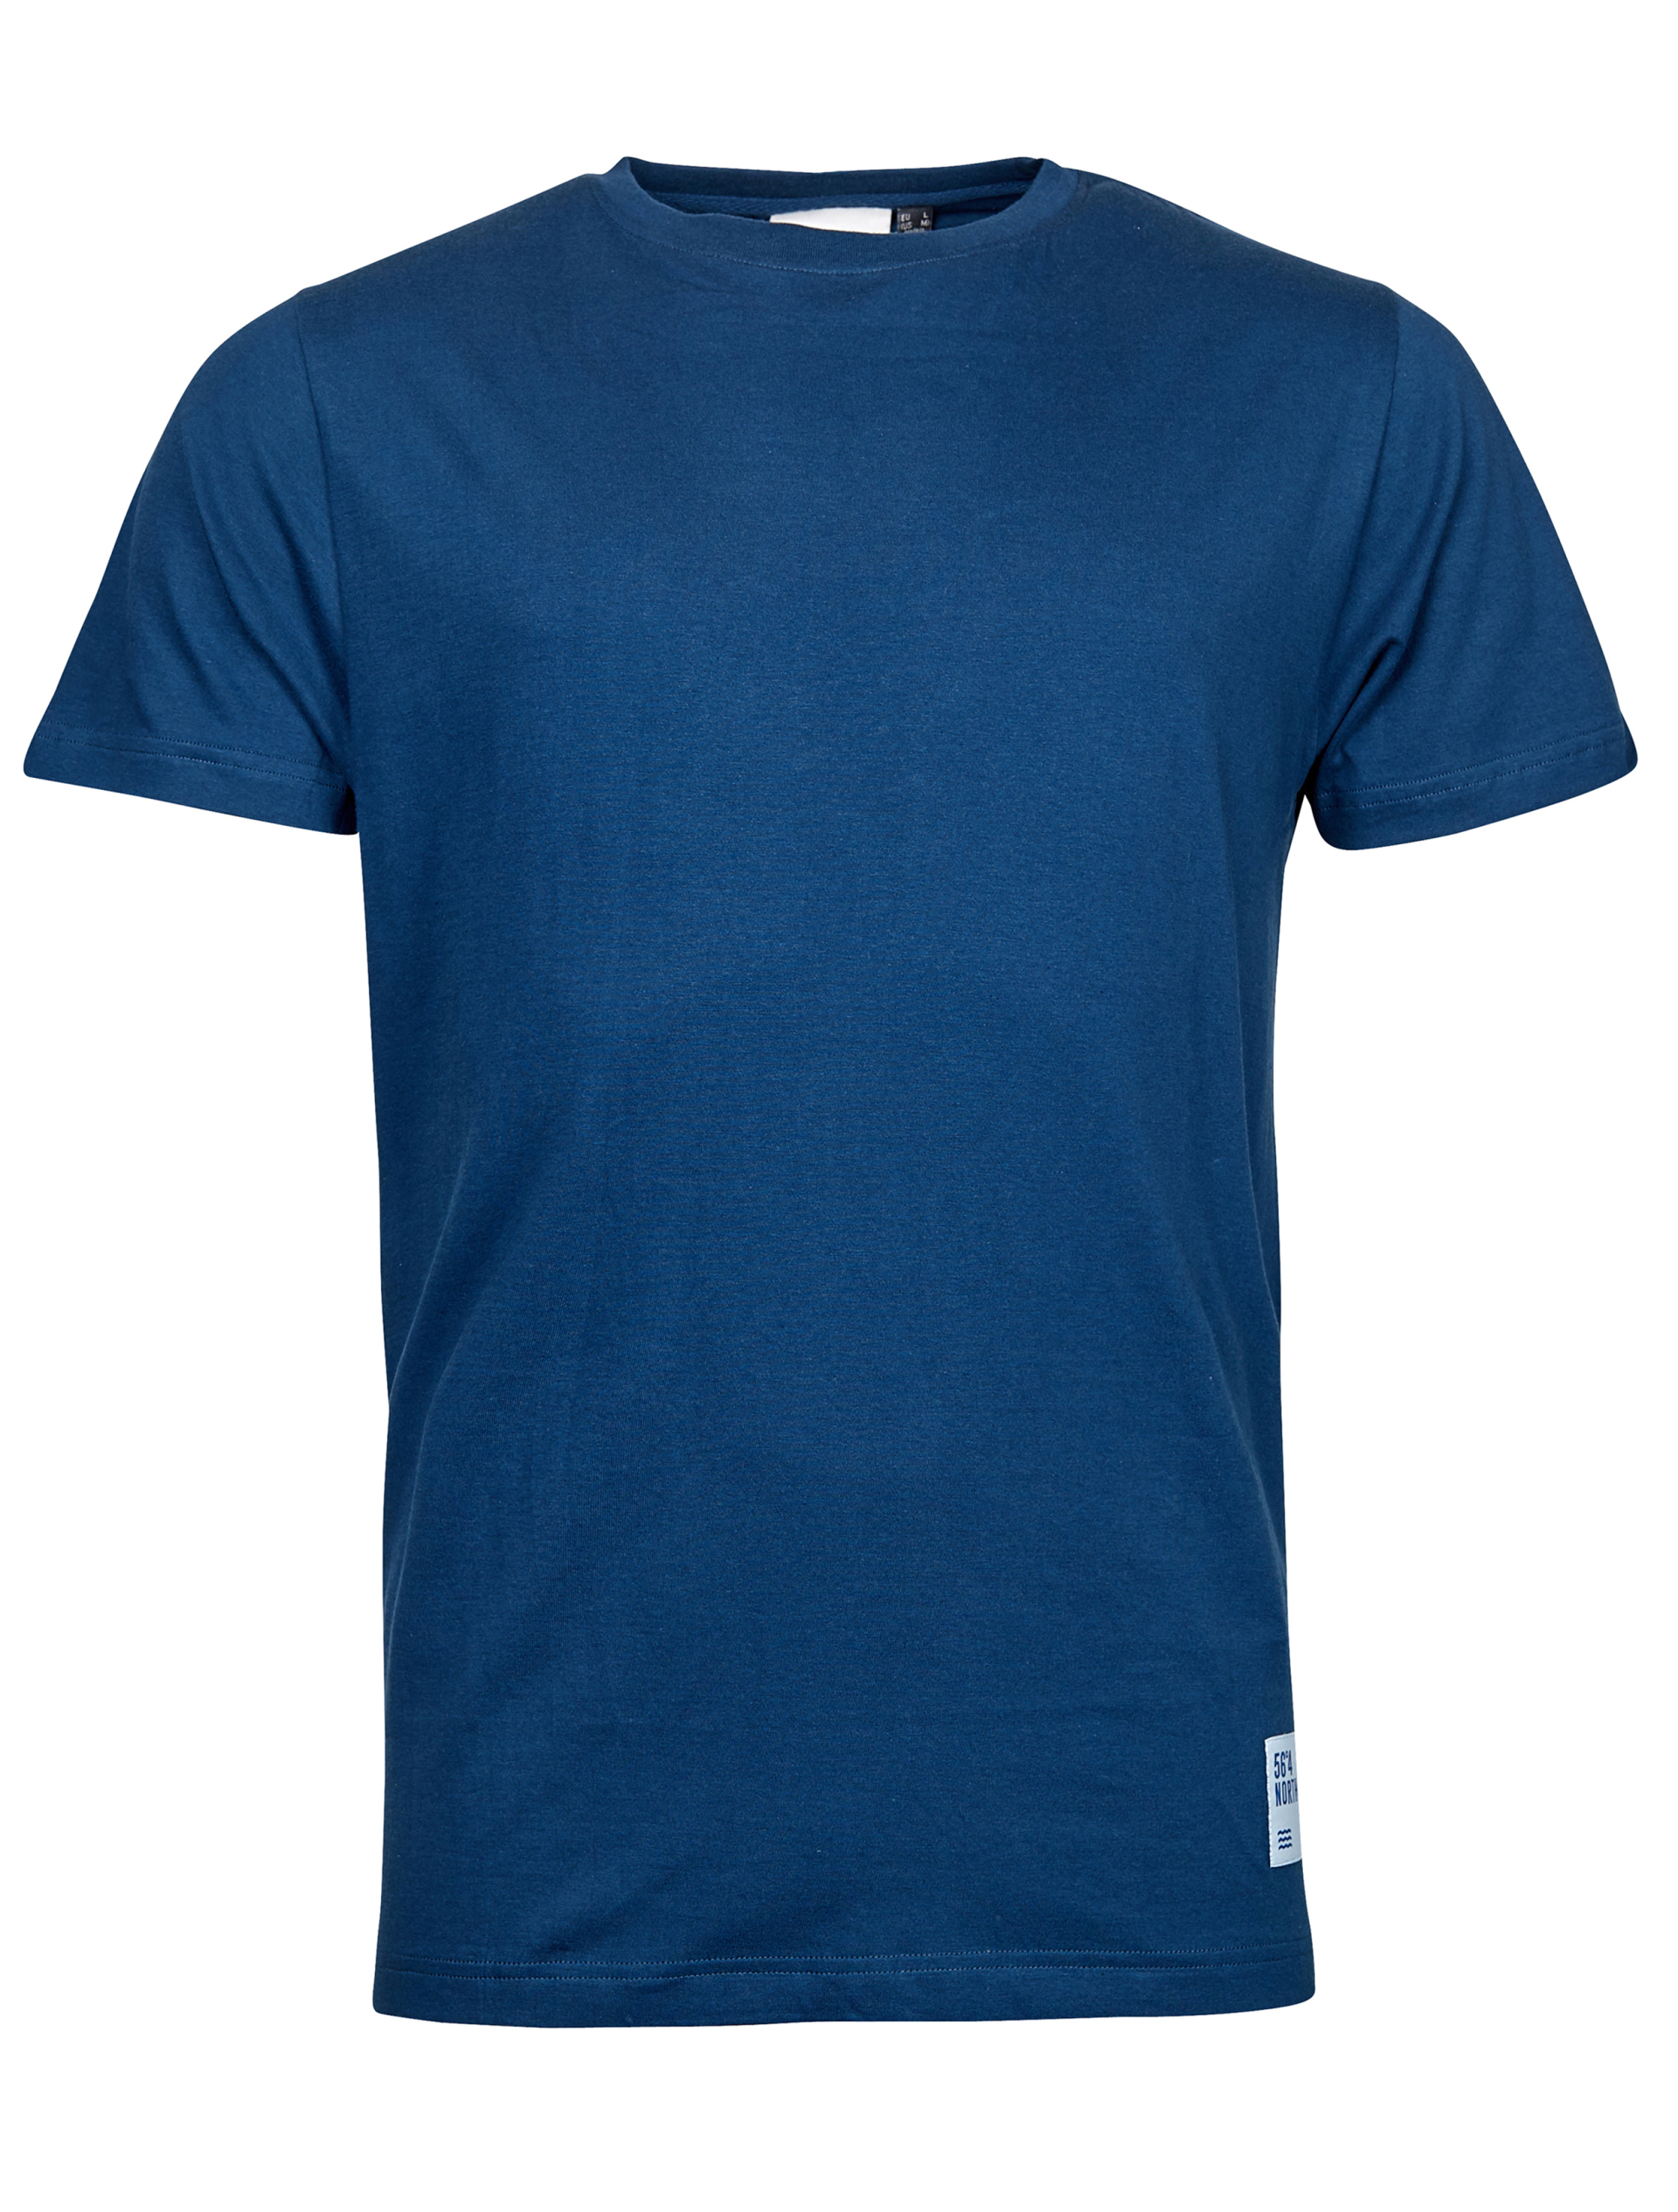 North T-shirt blå / navy